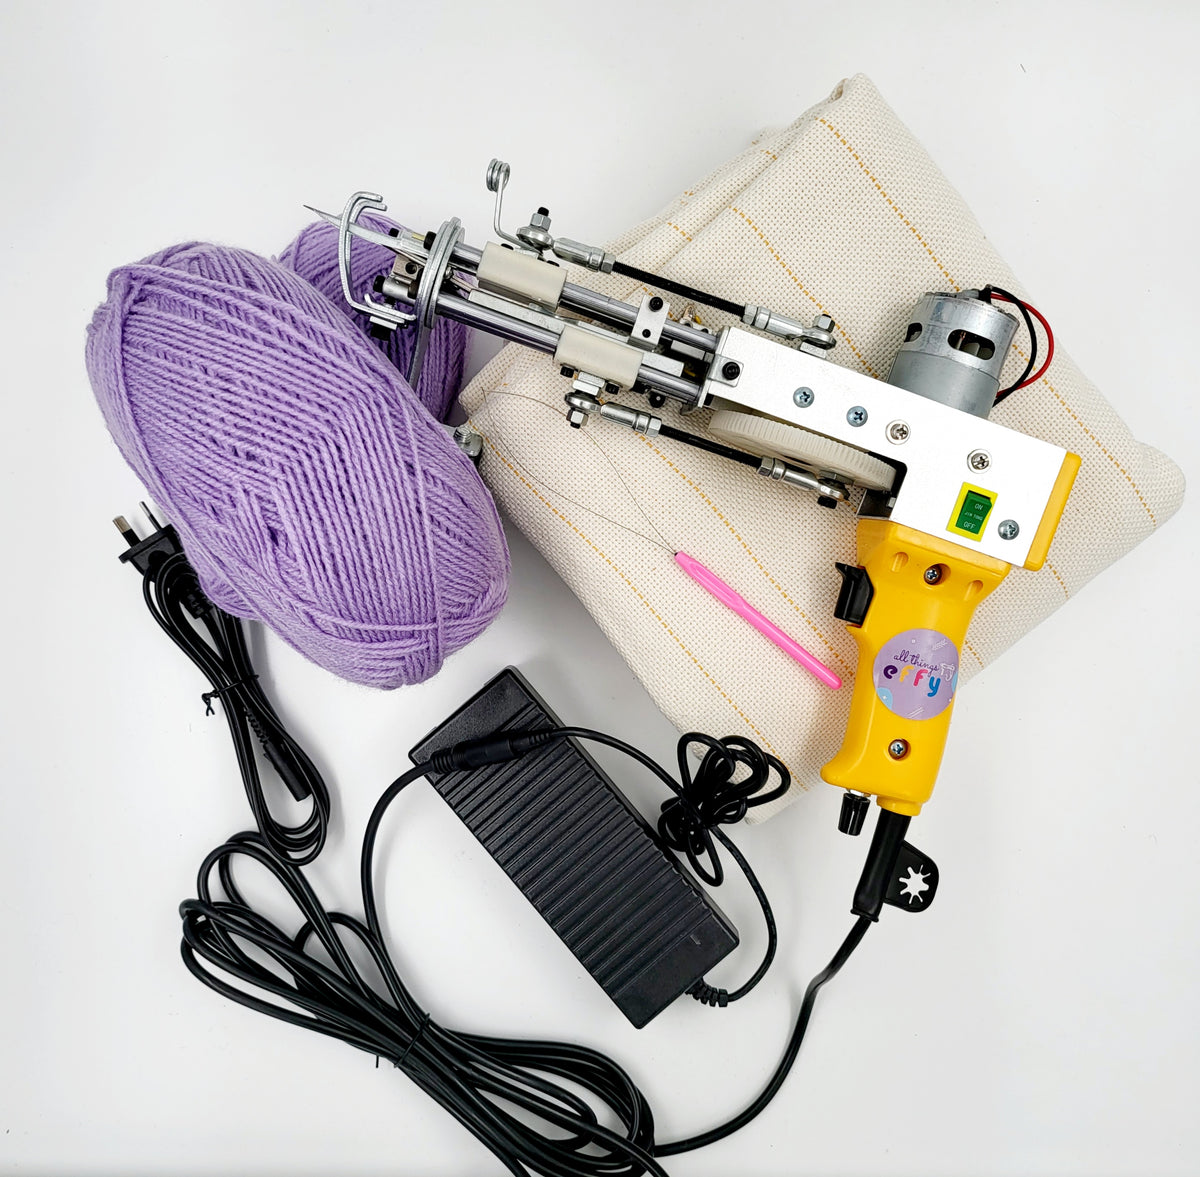 The Basic Rug Tufting Starter Pack - Frame, Cloth, Machine, Yarn